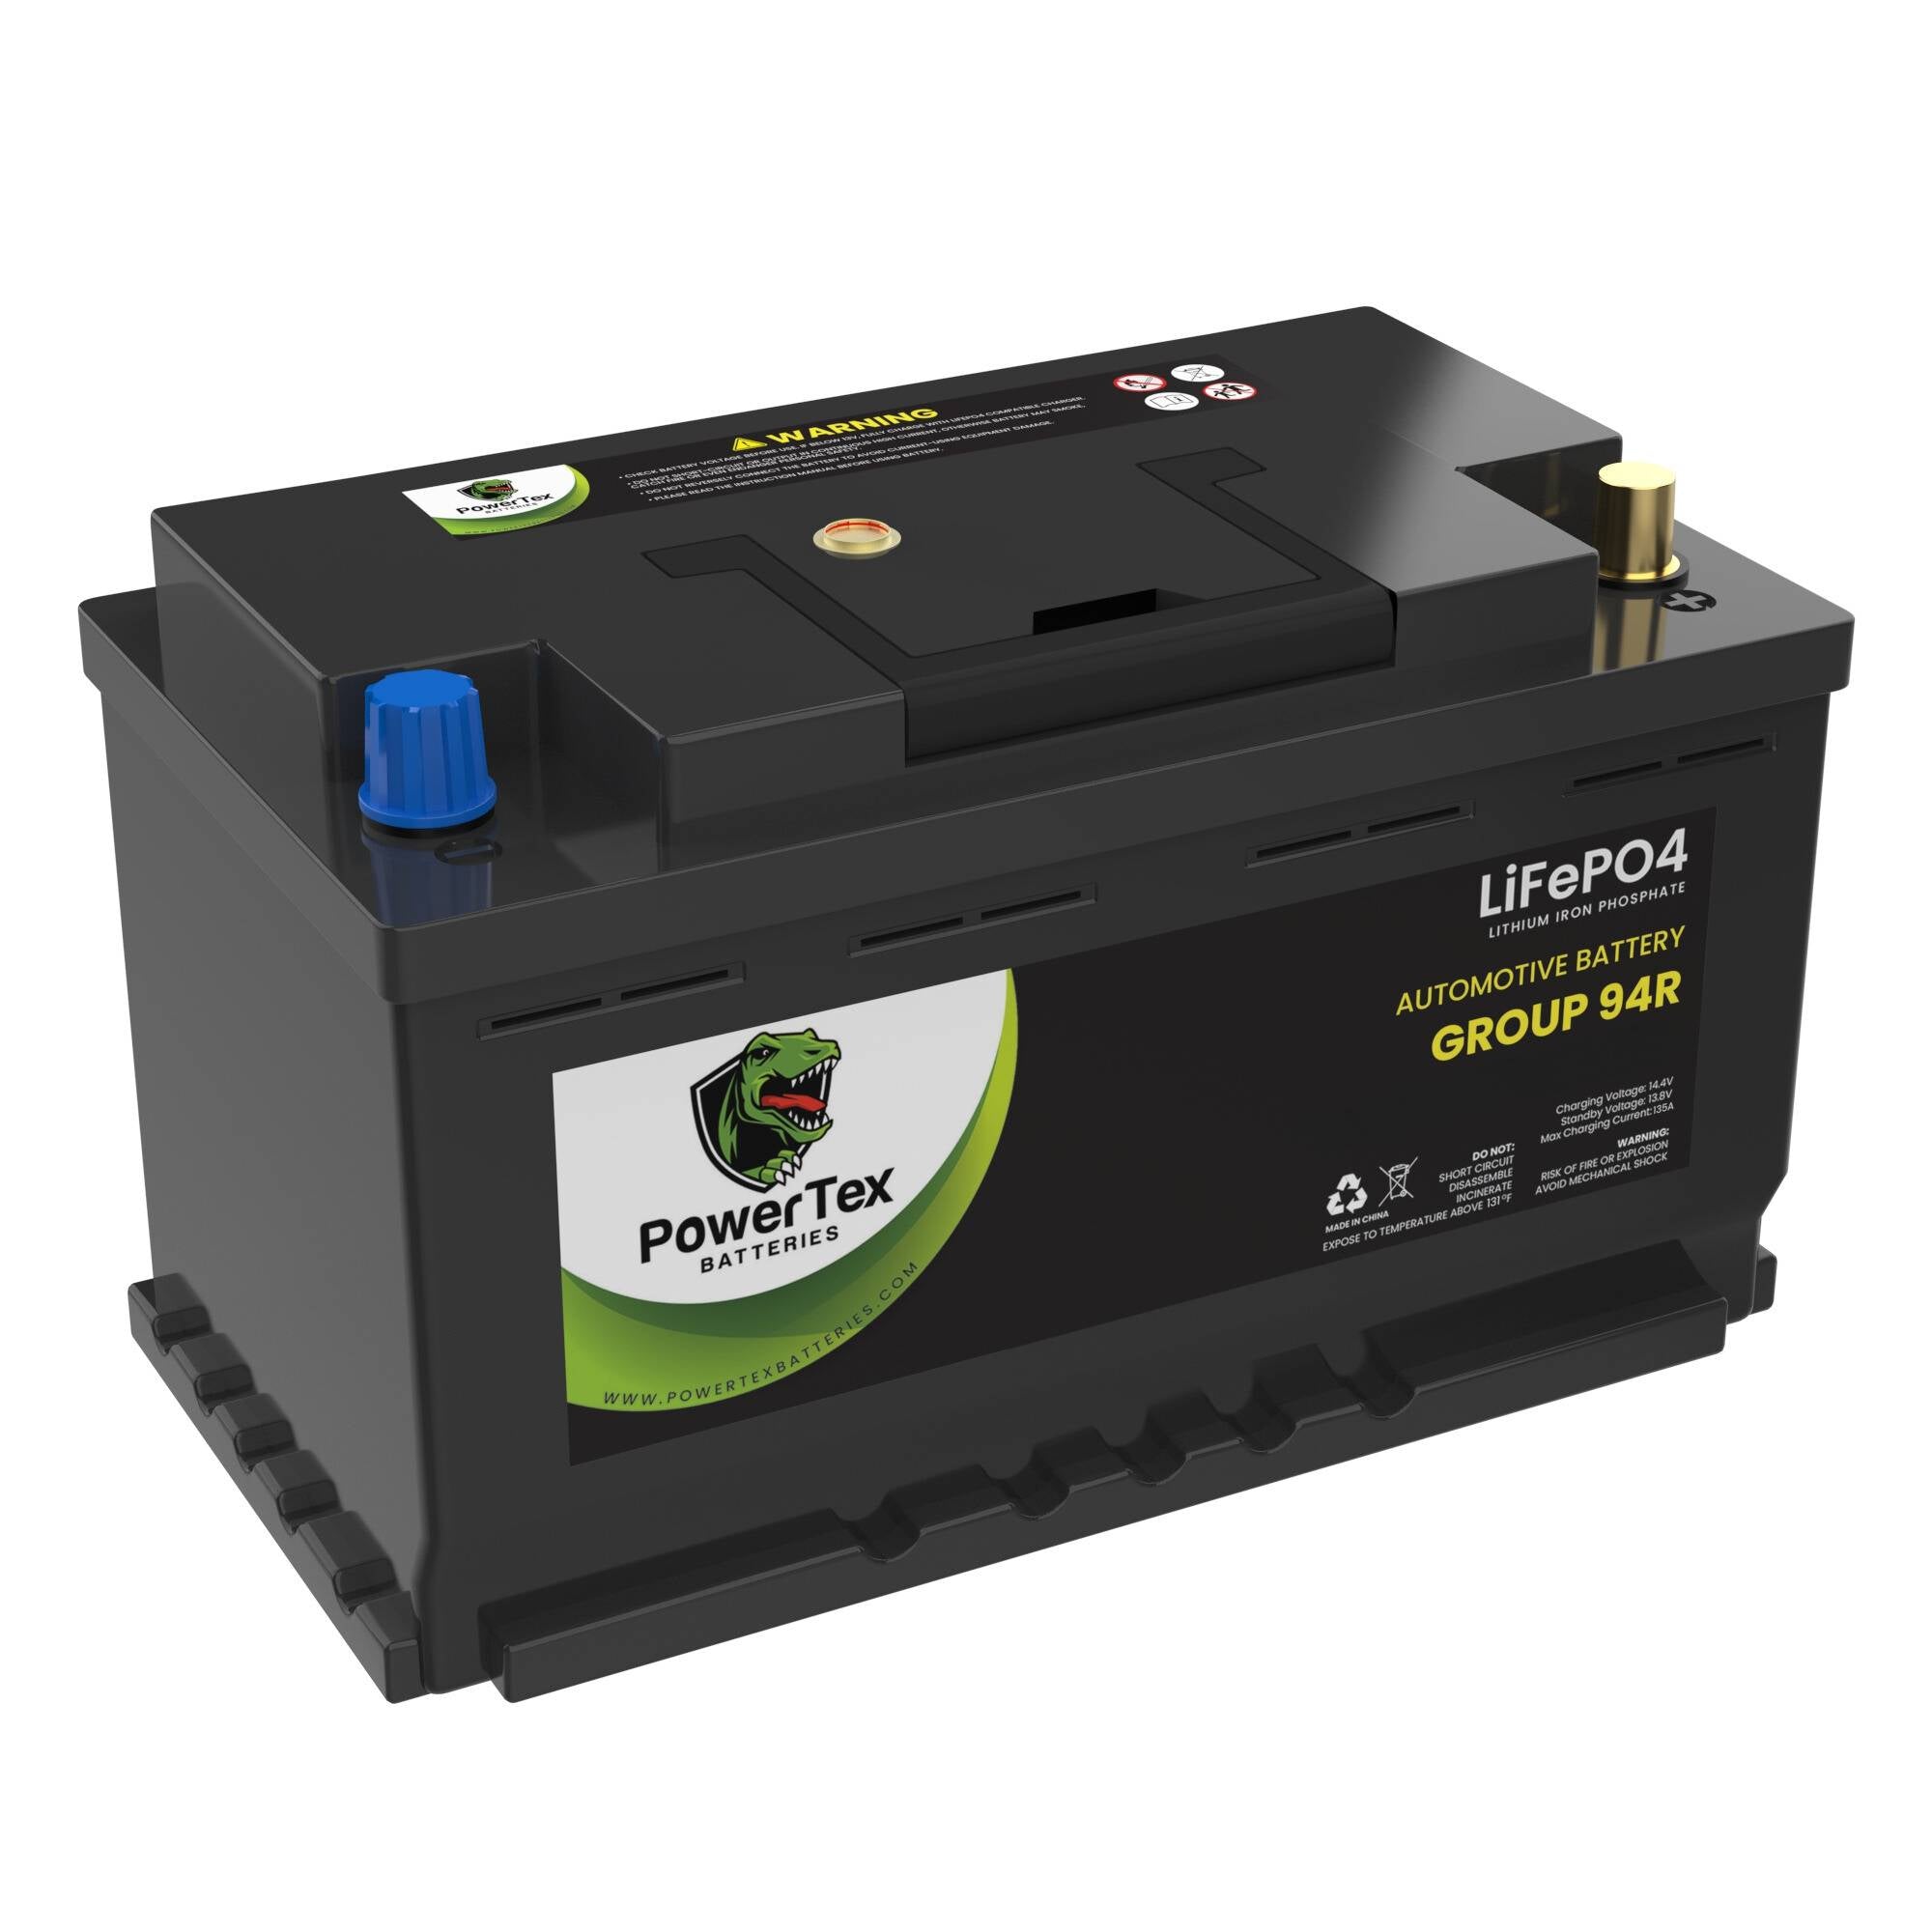 PowerTex Batteries BCI Group 94R / H7 Lithium LiFePO4 Automotive Battery